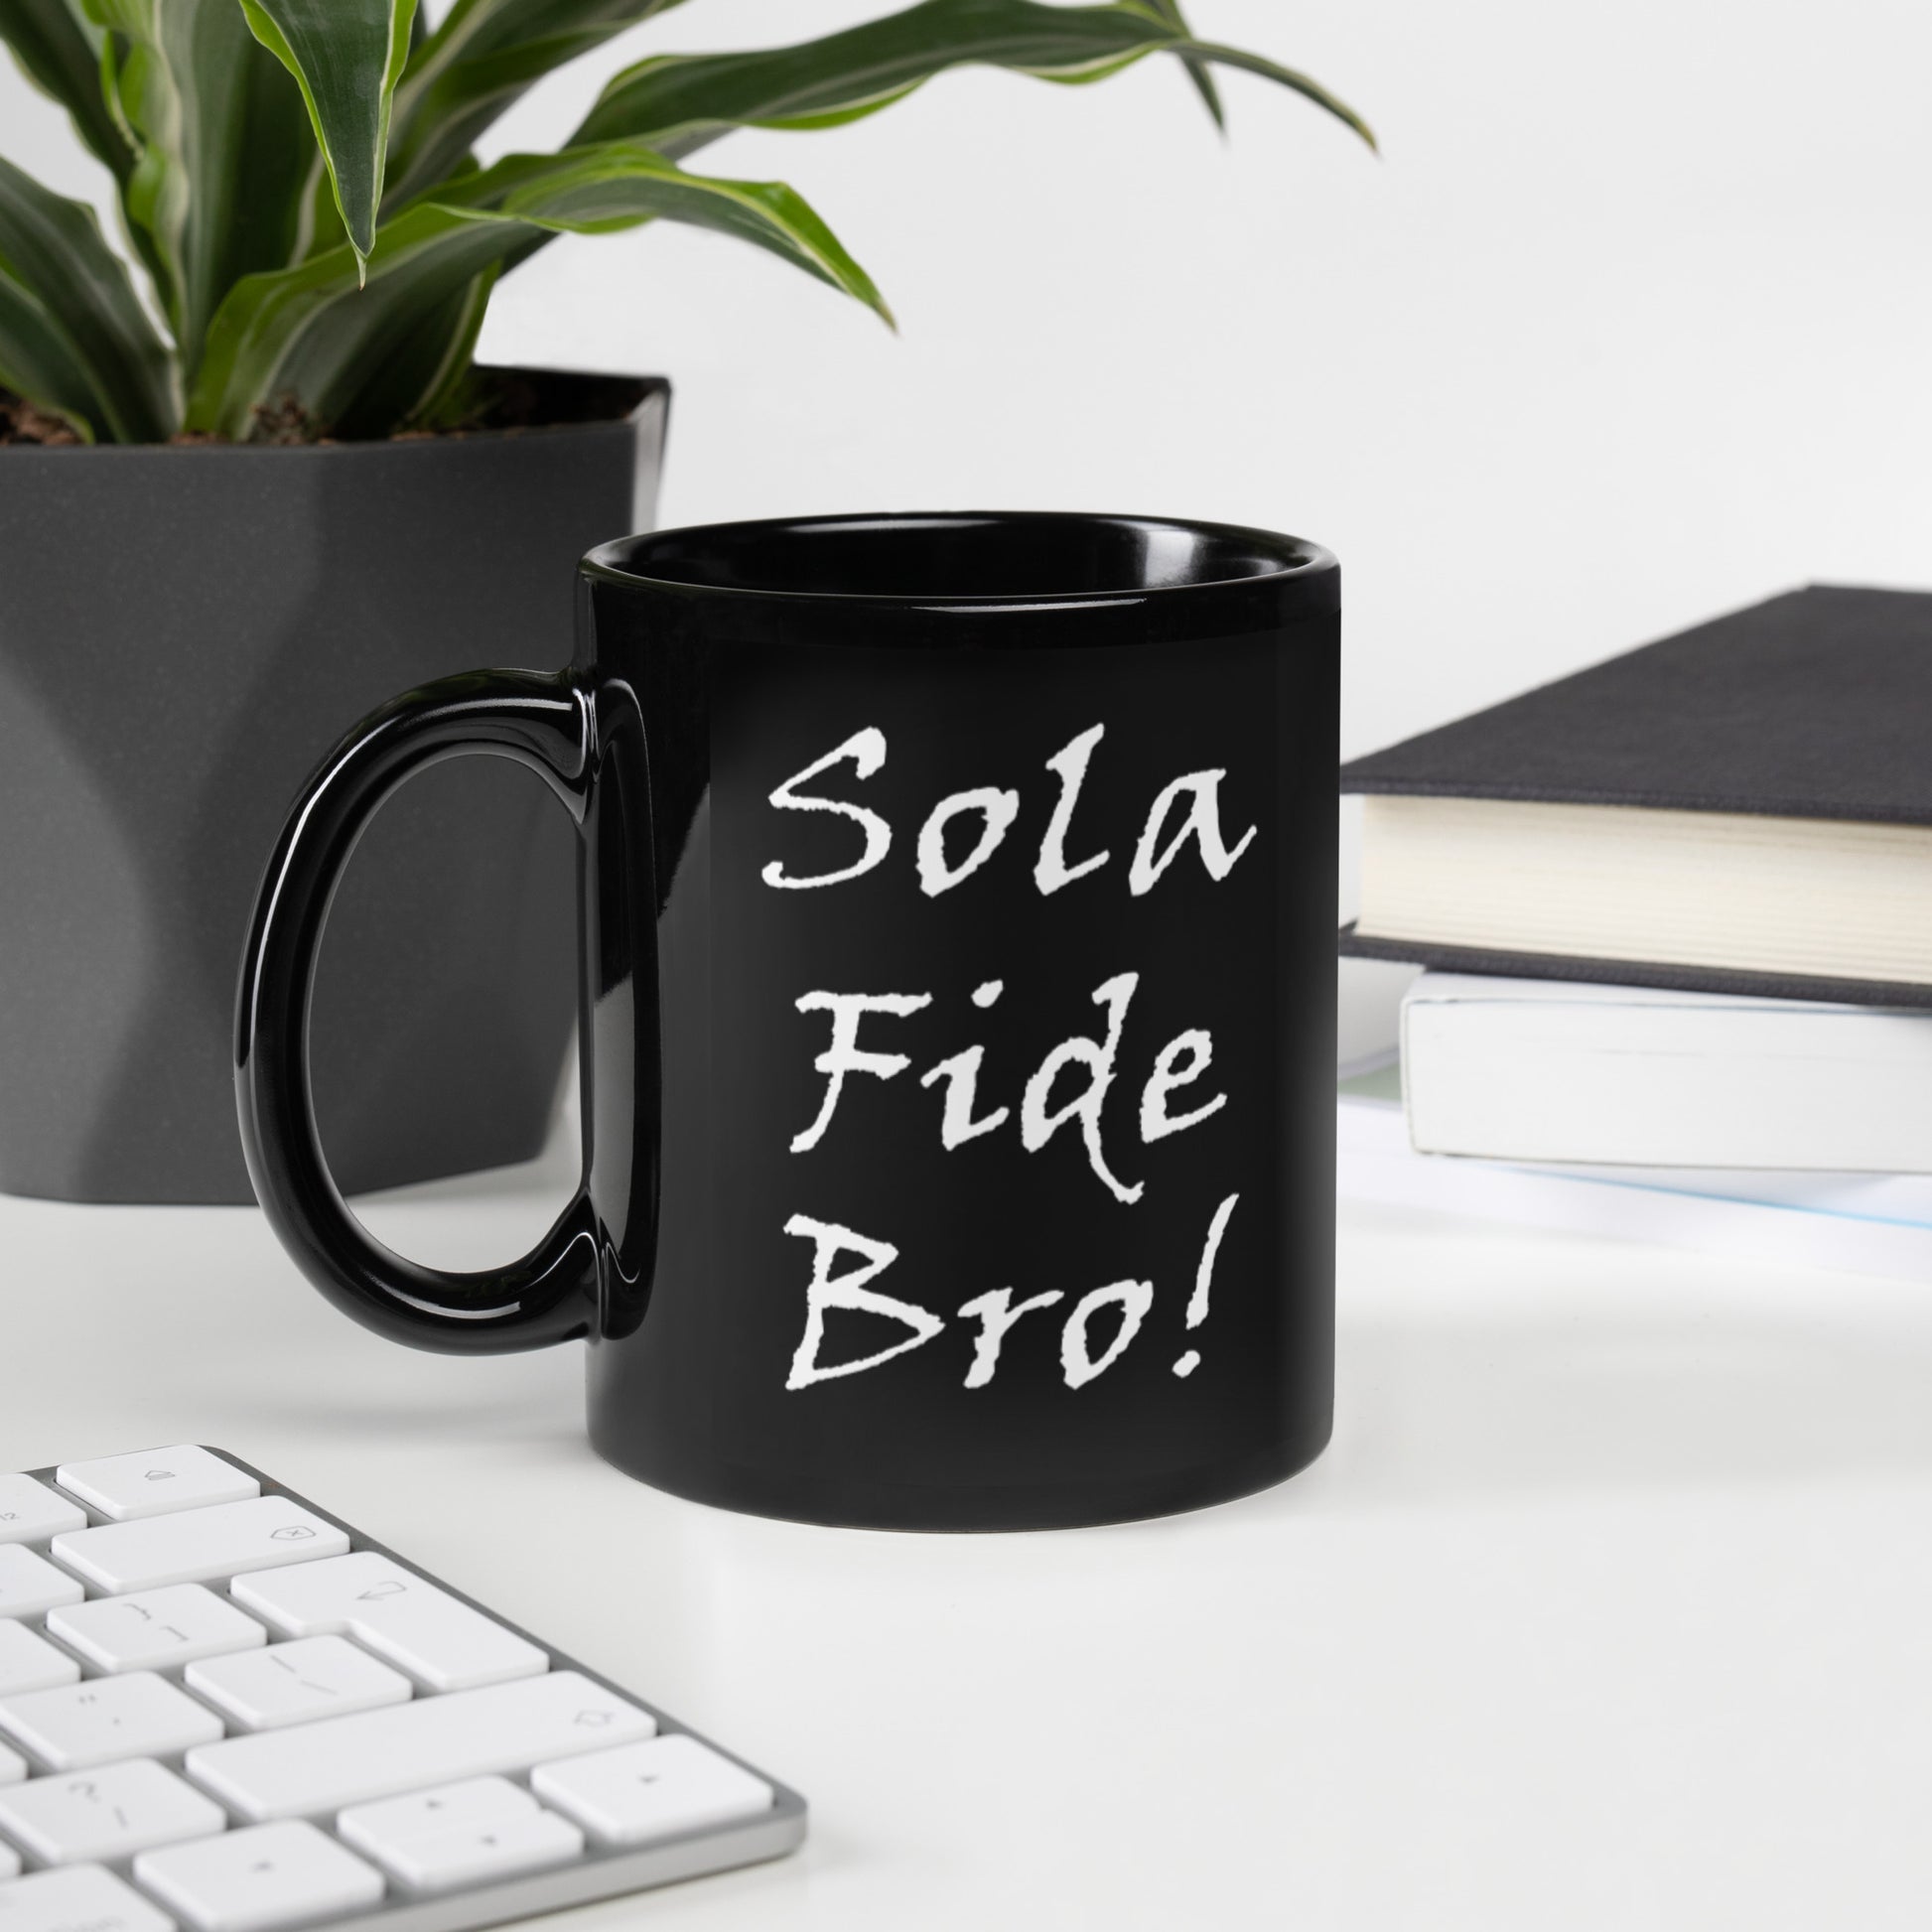 Sola Fide Bro! Black Glossy Mug - Solid Rock Designs | Christian Apparel